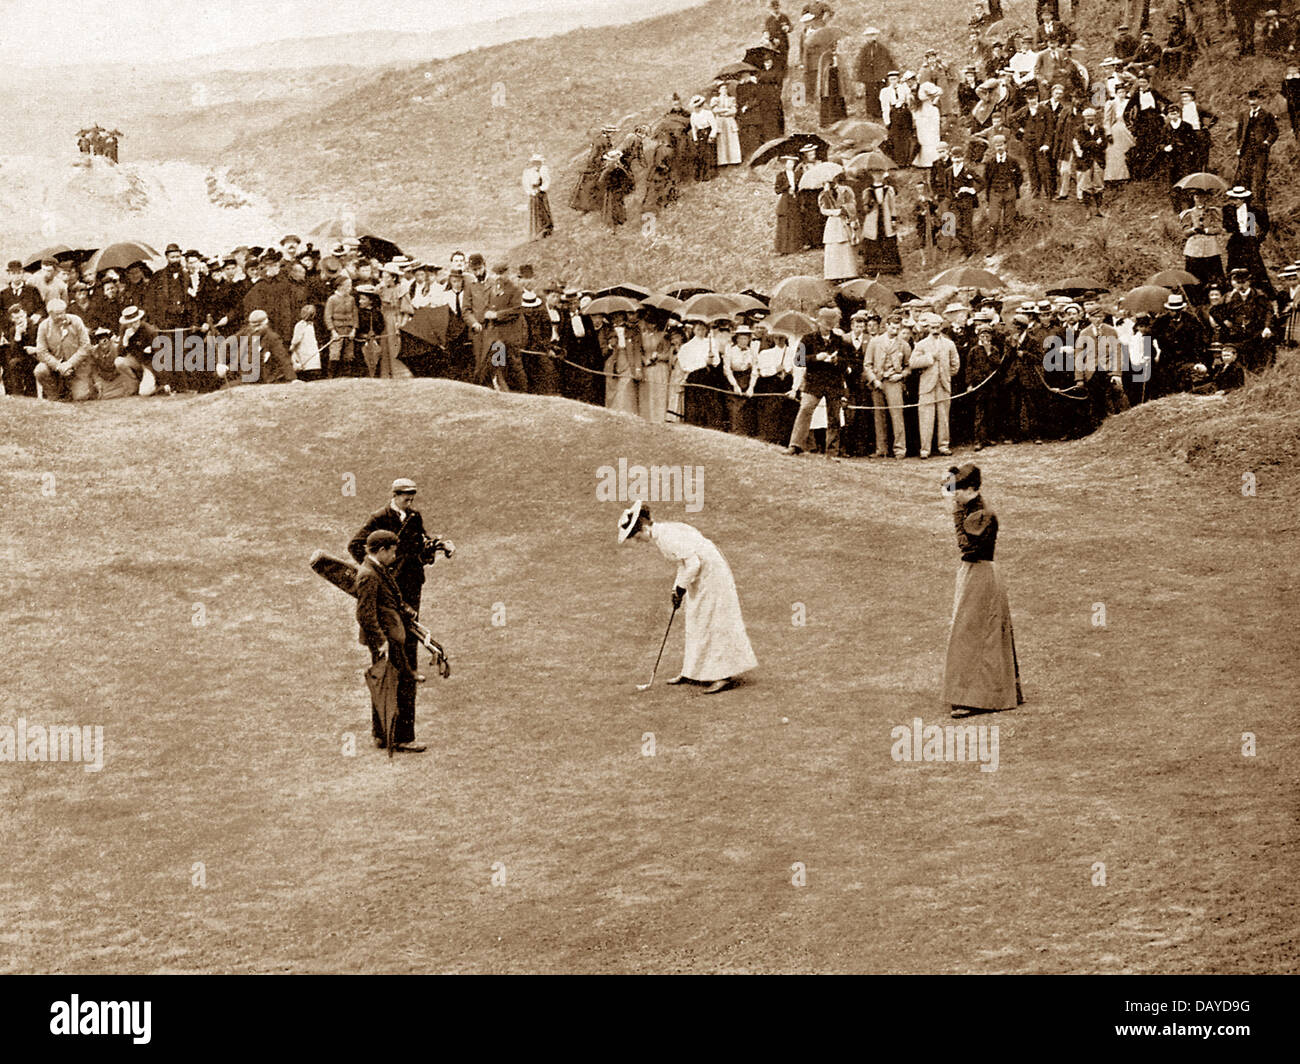 Portrush Golf Links early 1900s Stock Photo